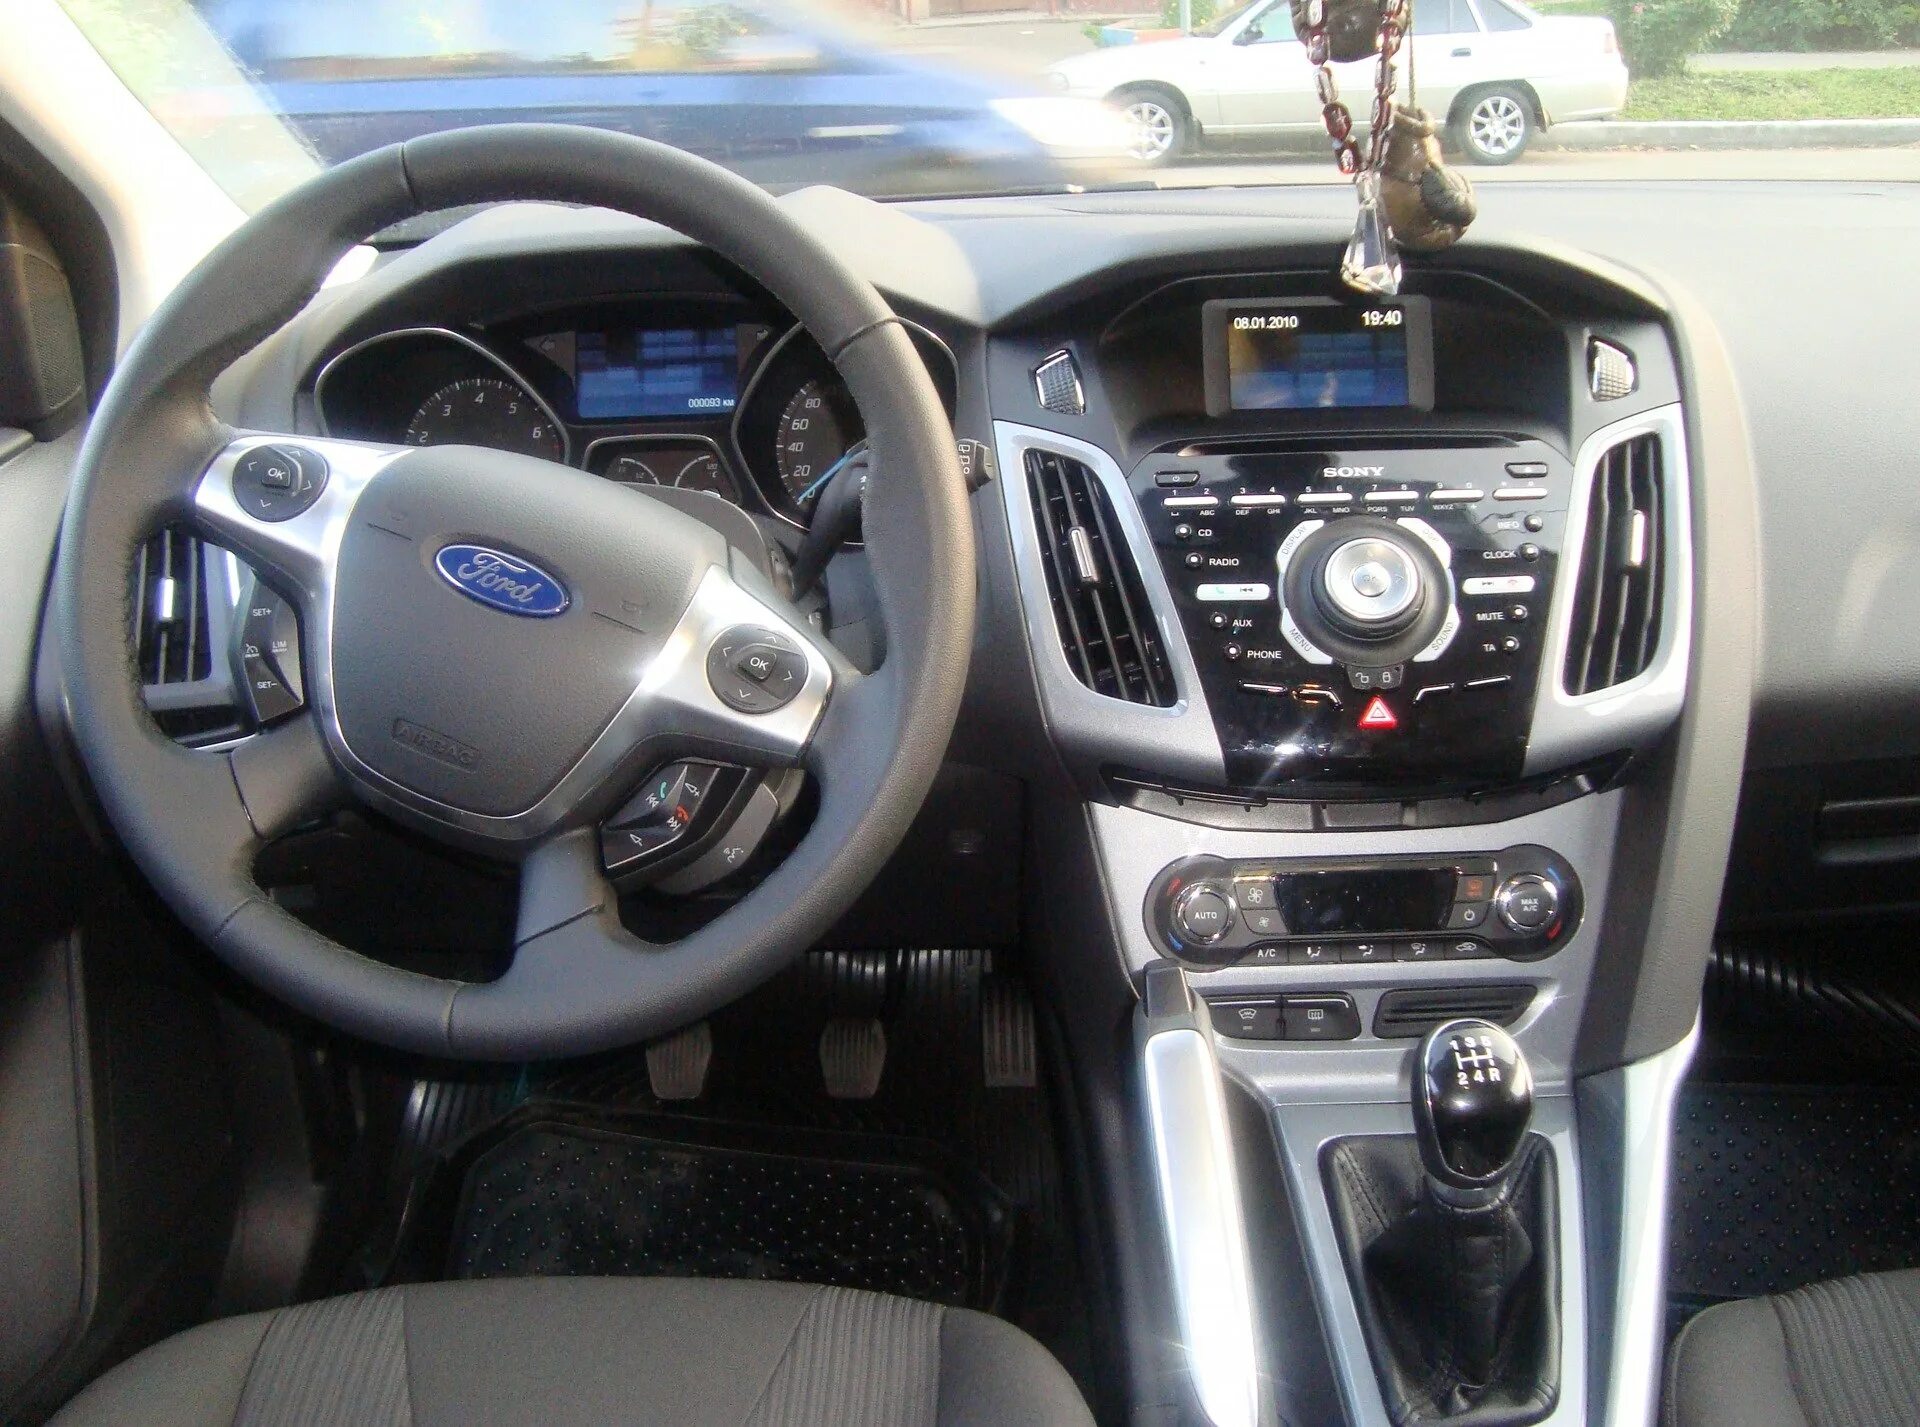 Форд фокус хэтчбек автомат. Ford Focus 3 салон. Ford Focus 3 хэтчбек салон. Форд фокус 2011 хэтчбек салон. Форд фокус 3 2011 салон.